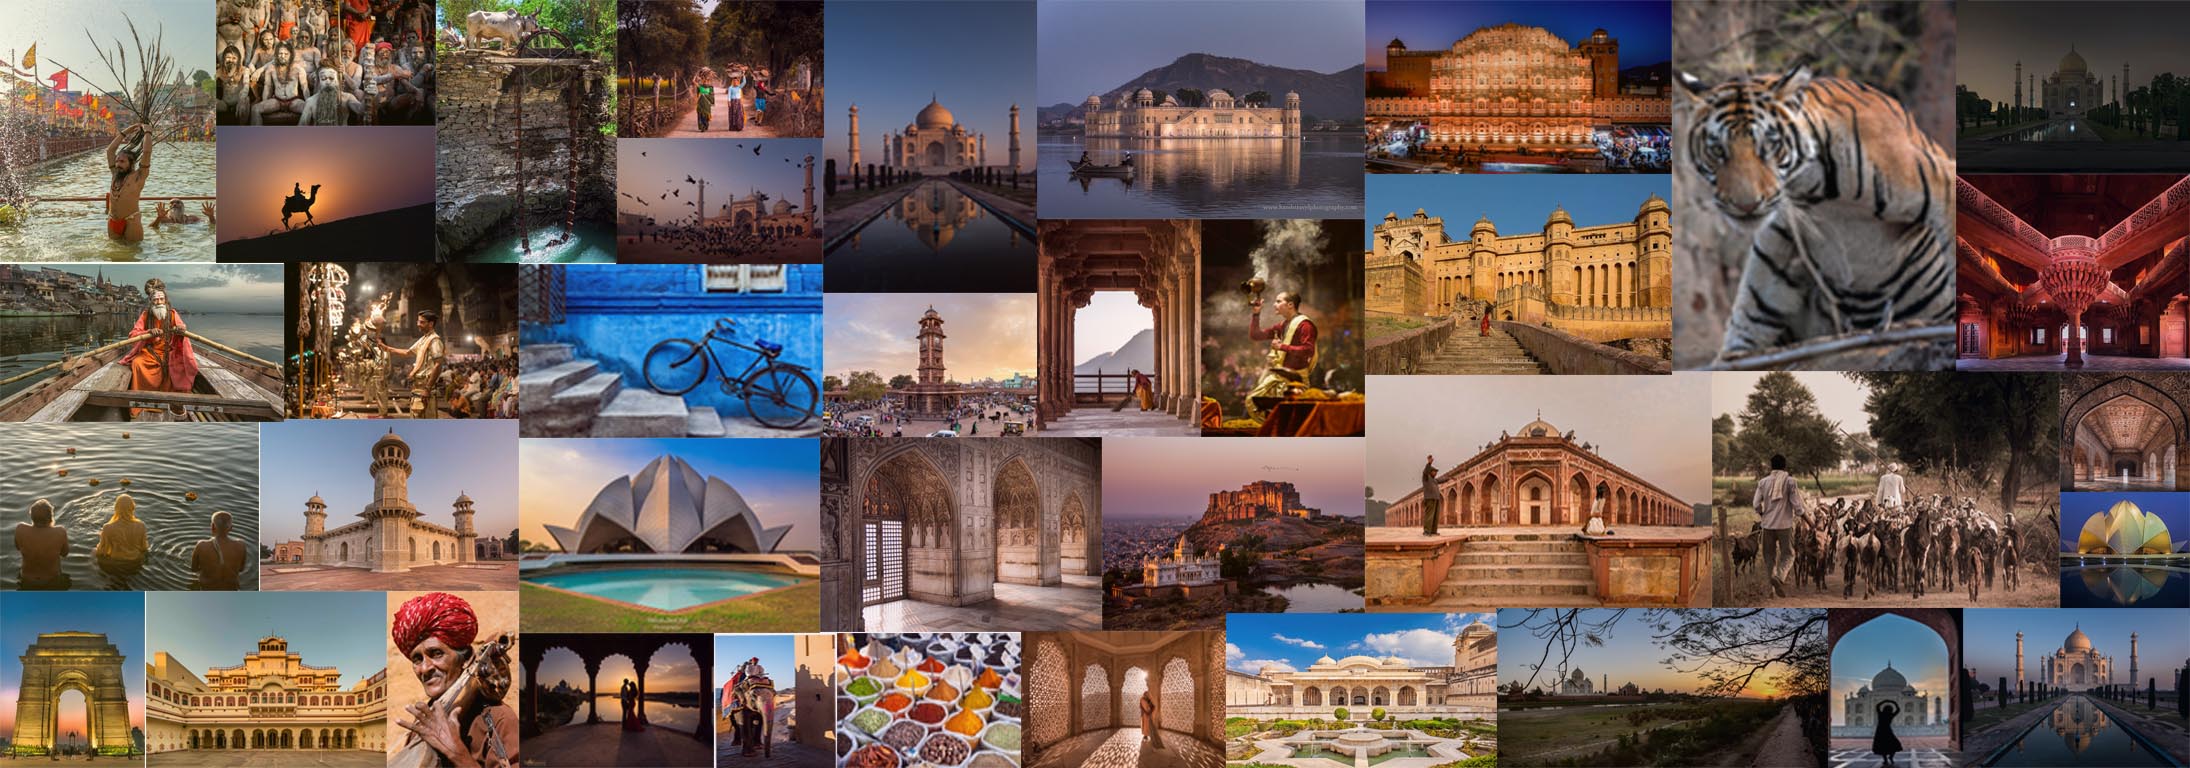 Destination guide | Golden triangle Tour India | Taj Mahal Same Day tour